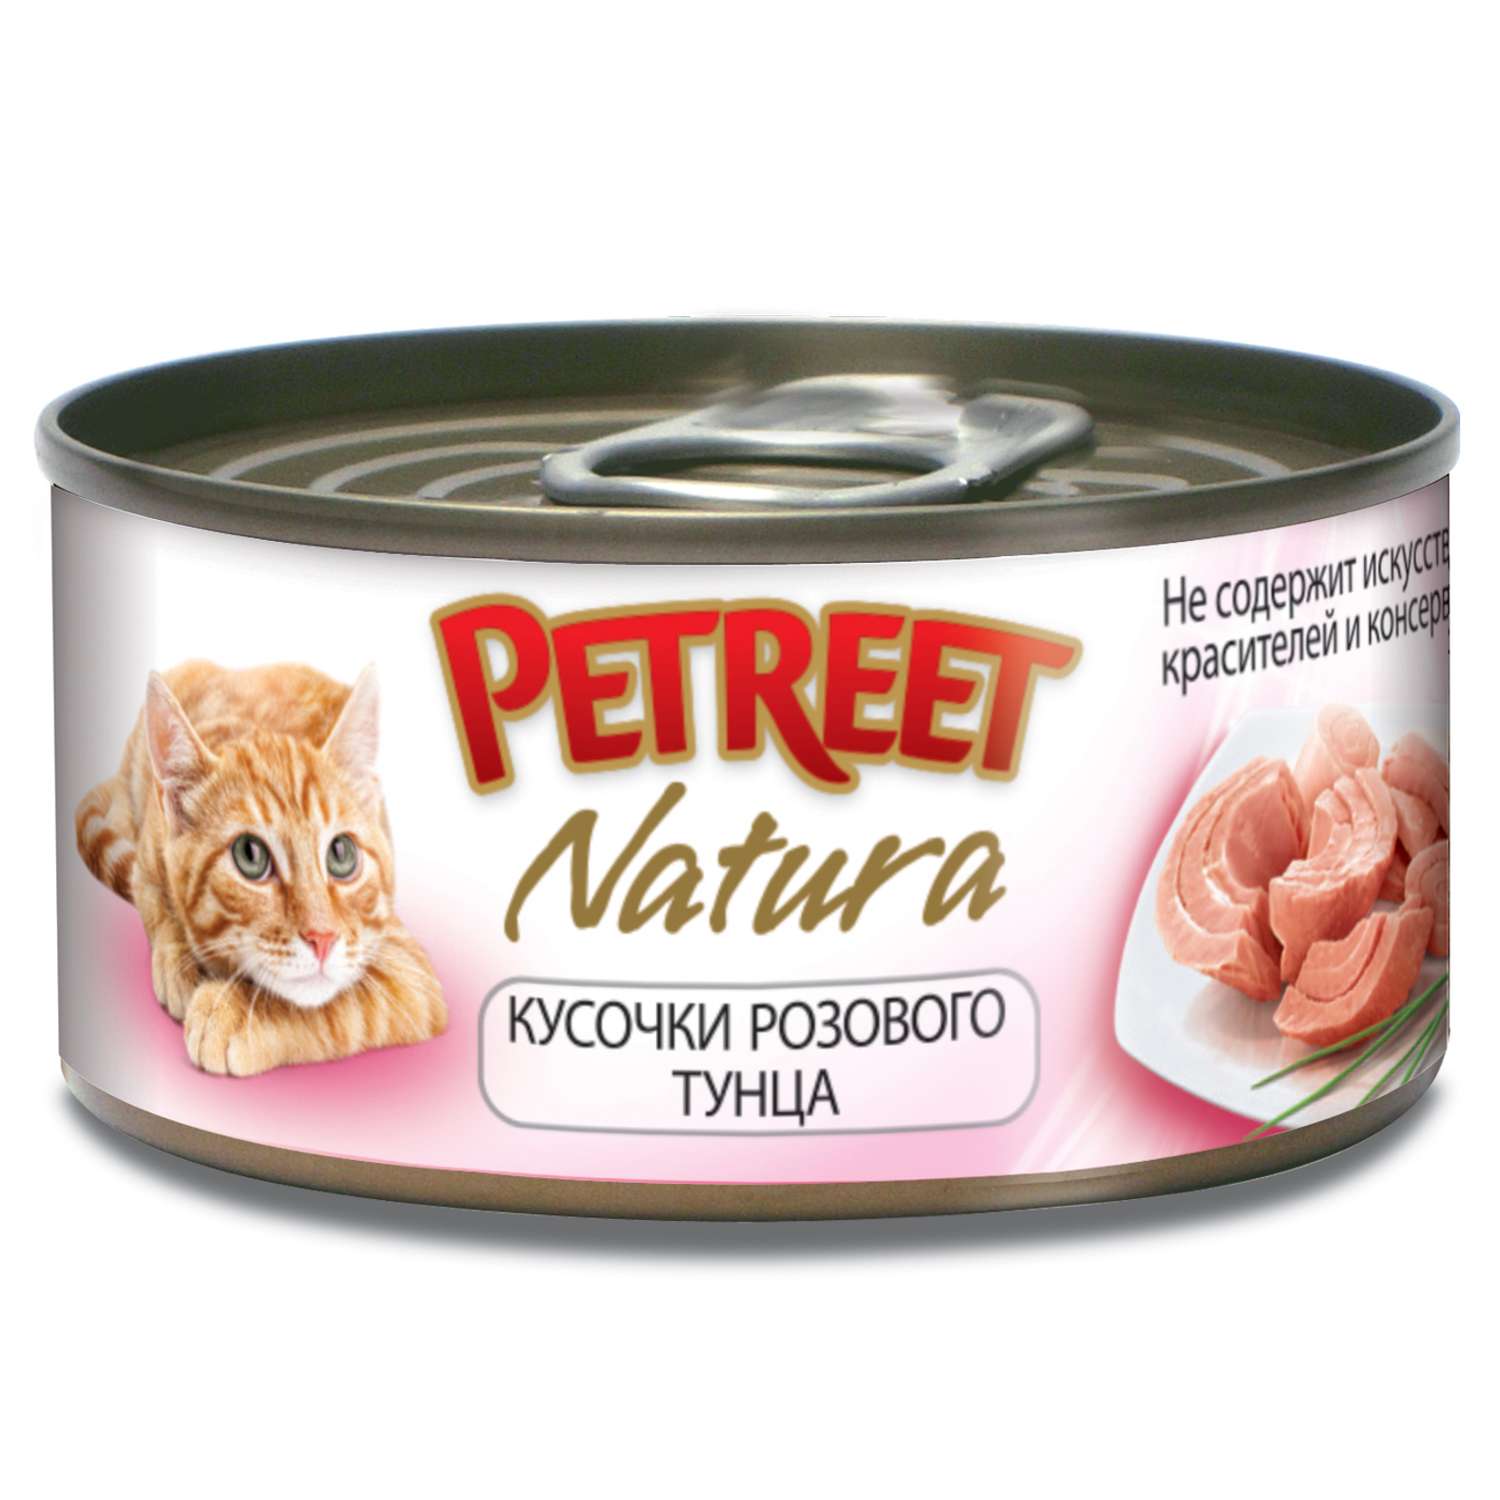 Корм влажный для кошек Petreet 70г кусочки розового тунца консервированный - фото 1